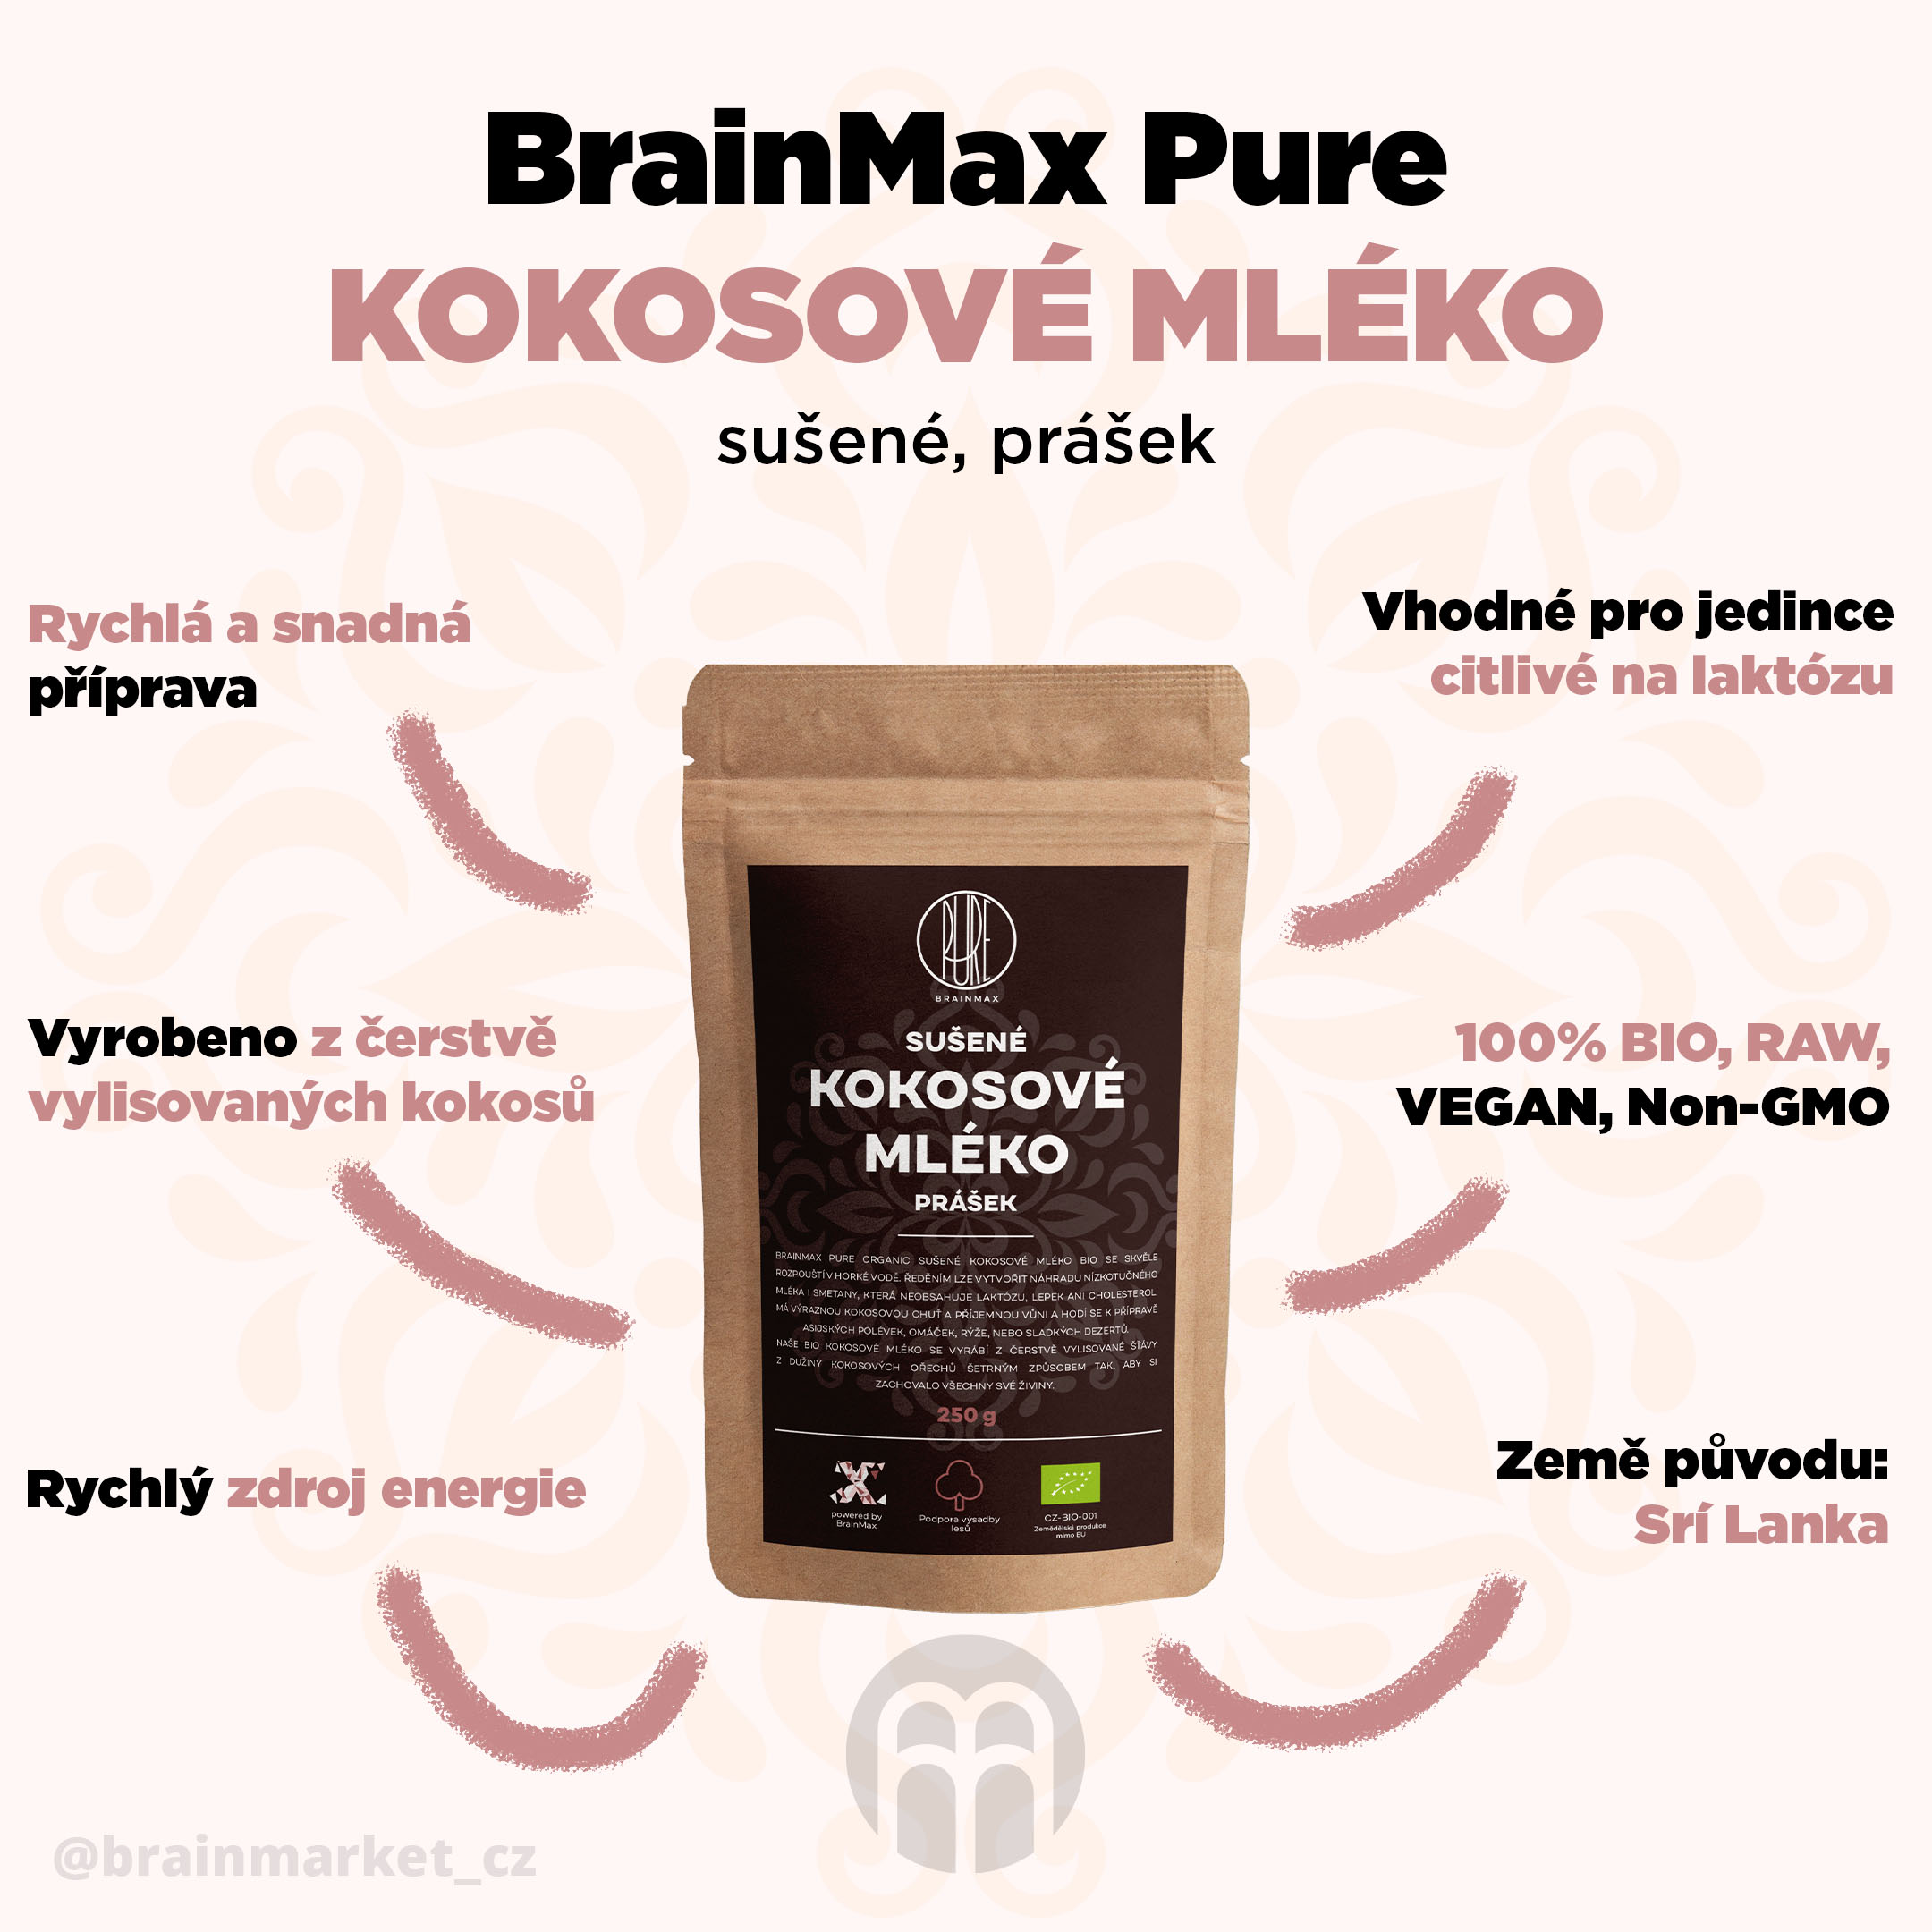 BrainMax Pure Kokosové mléko BIO prášek, 250 g - BrainMarket.cz